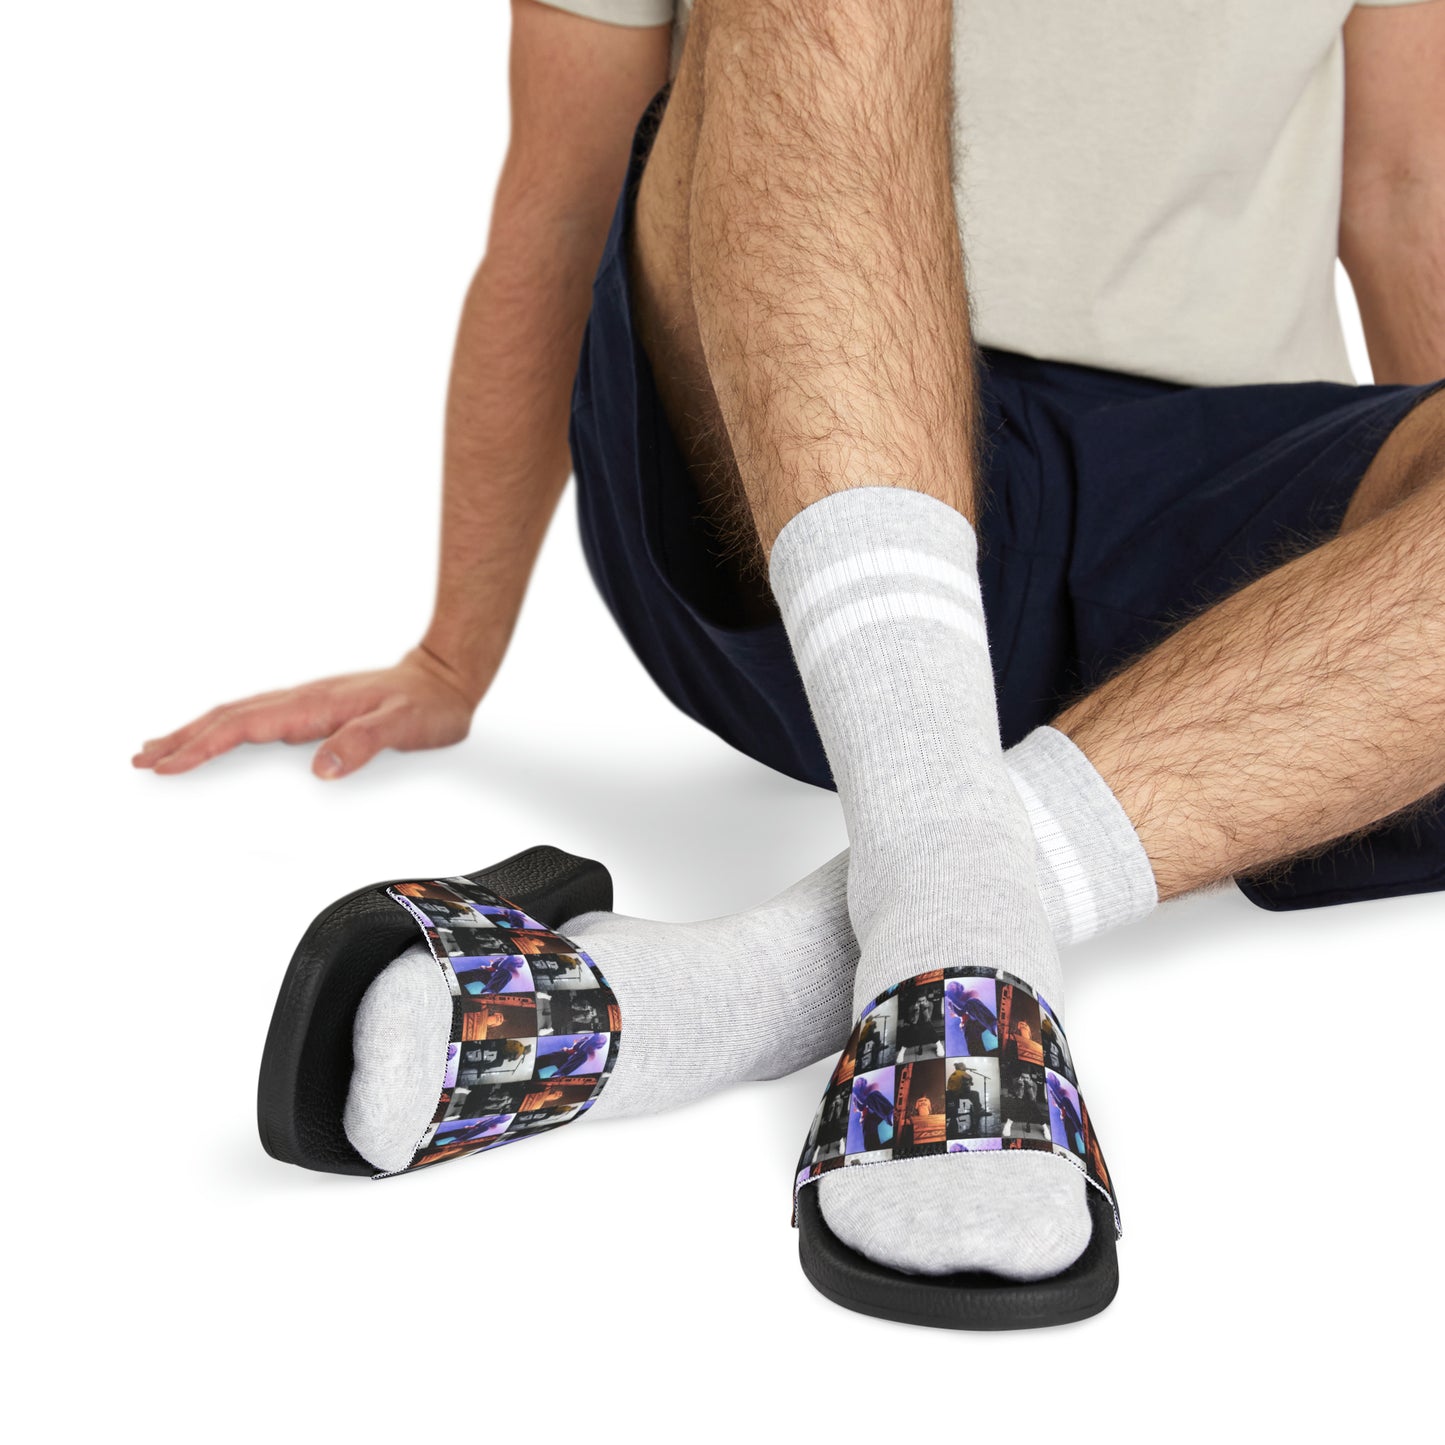 Post Malone On Tour Collage Men's Slide Sandals